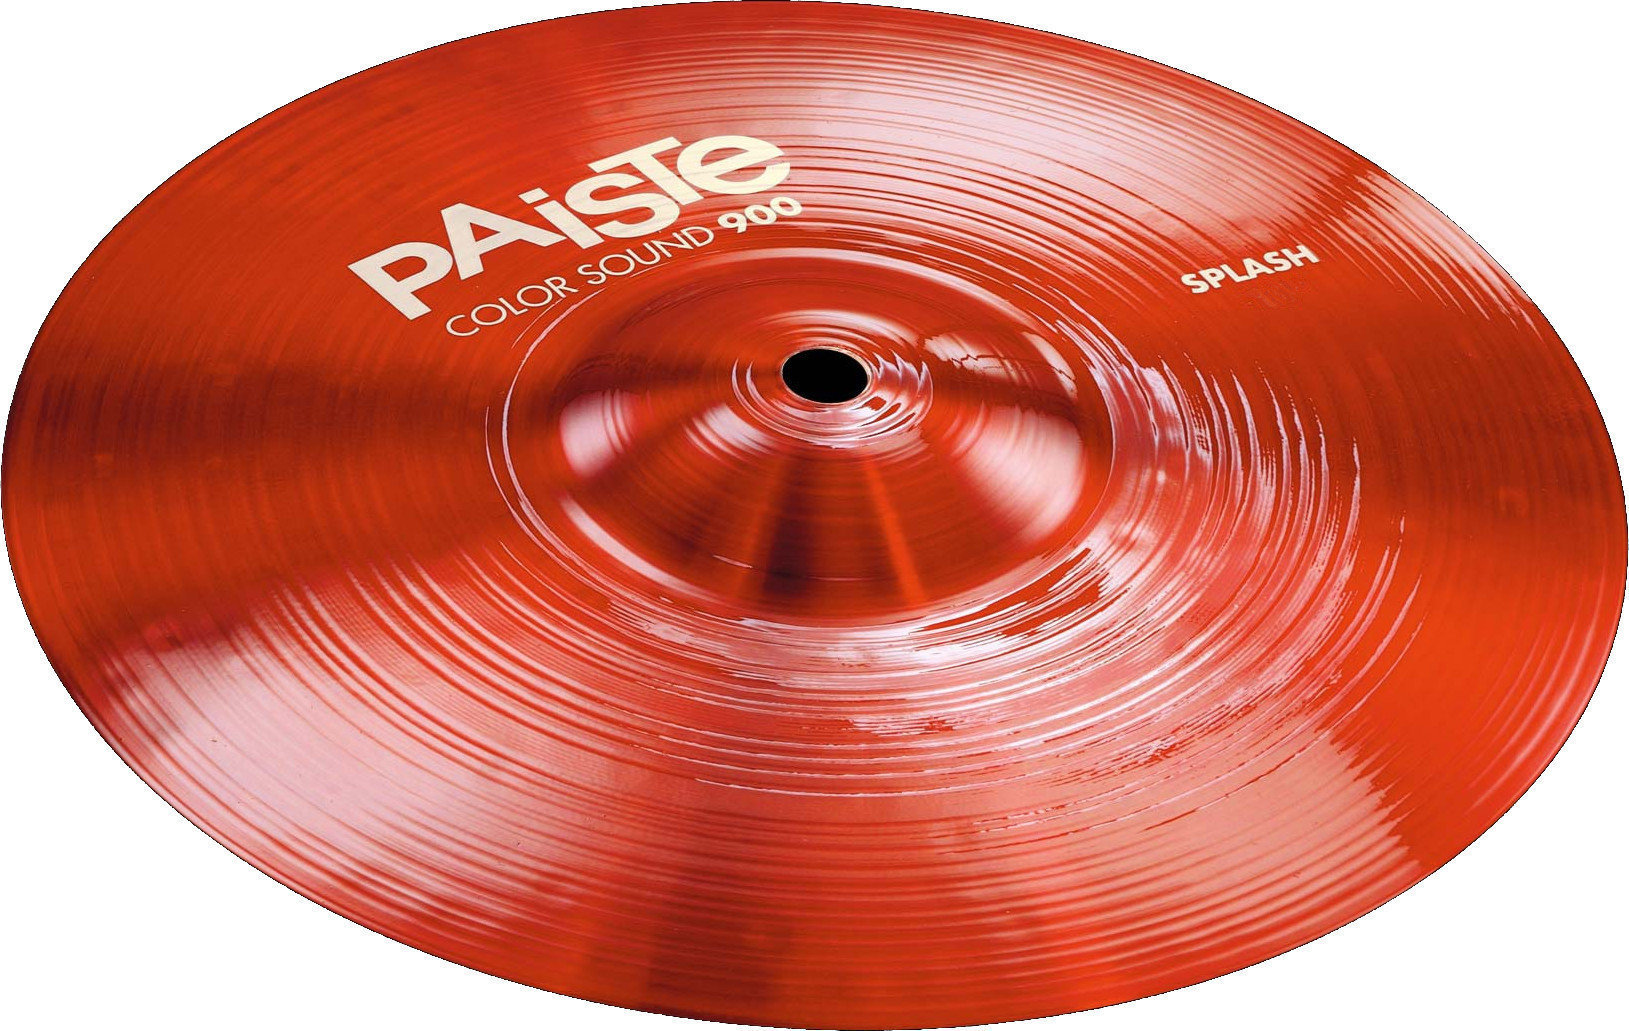 Splash Cymbal Paiste Color Sound 900 Splash Cymbal 12" Red